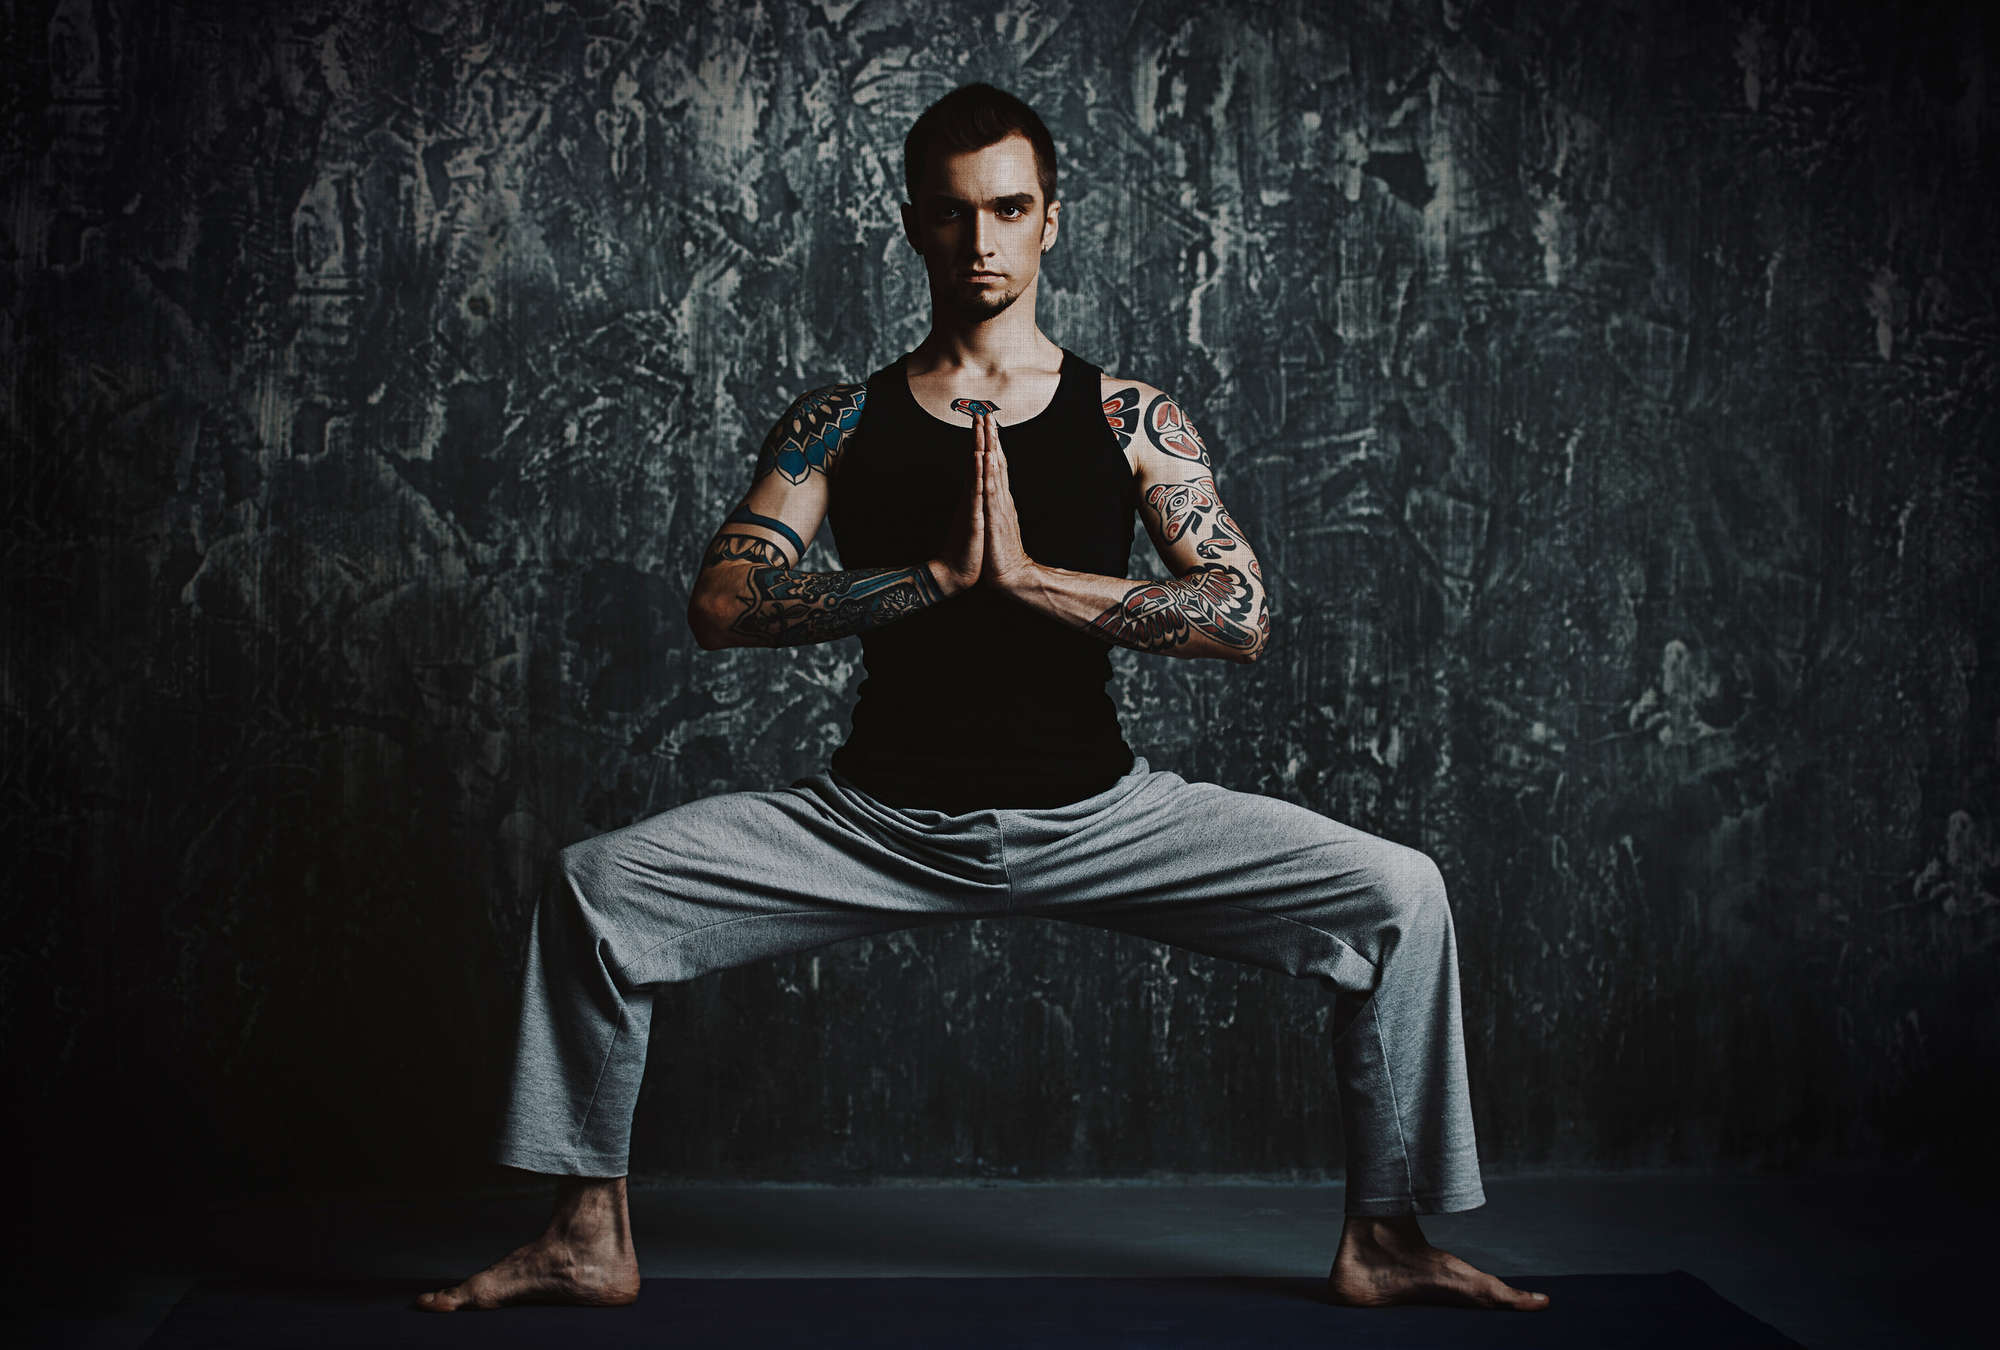             Chandra 1 - Hombre en postura de yoga como fotomural en estructura de lino natural - Azul, Negro | Polar liso de primera calidad
        